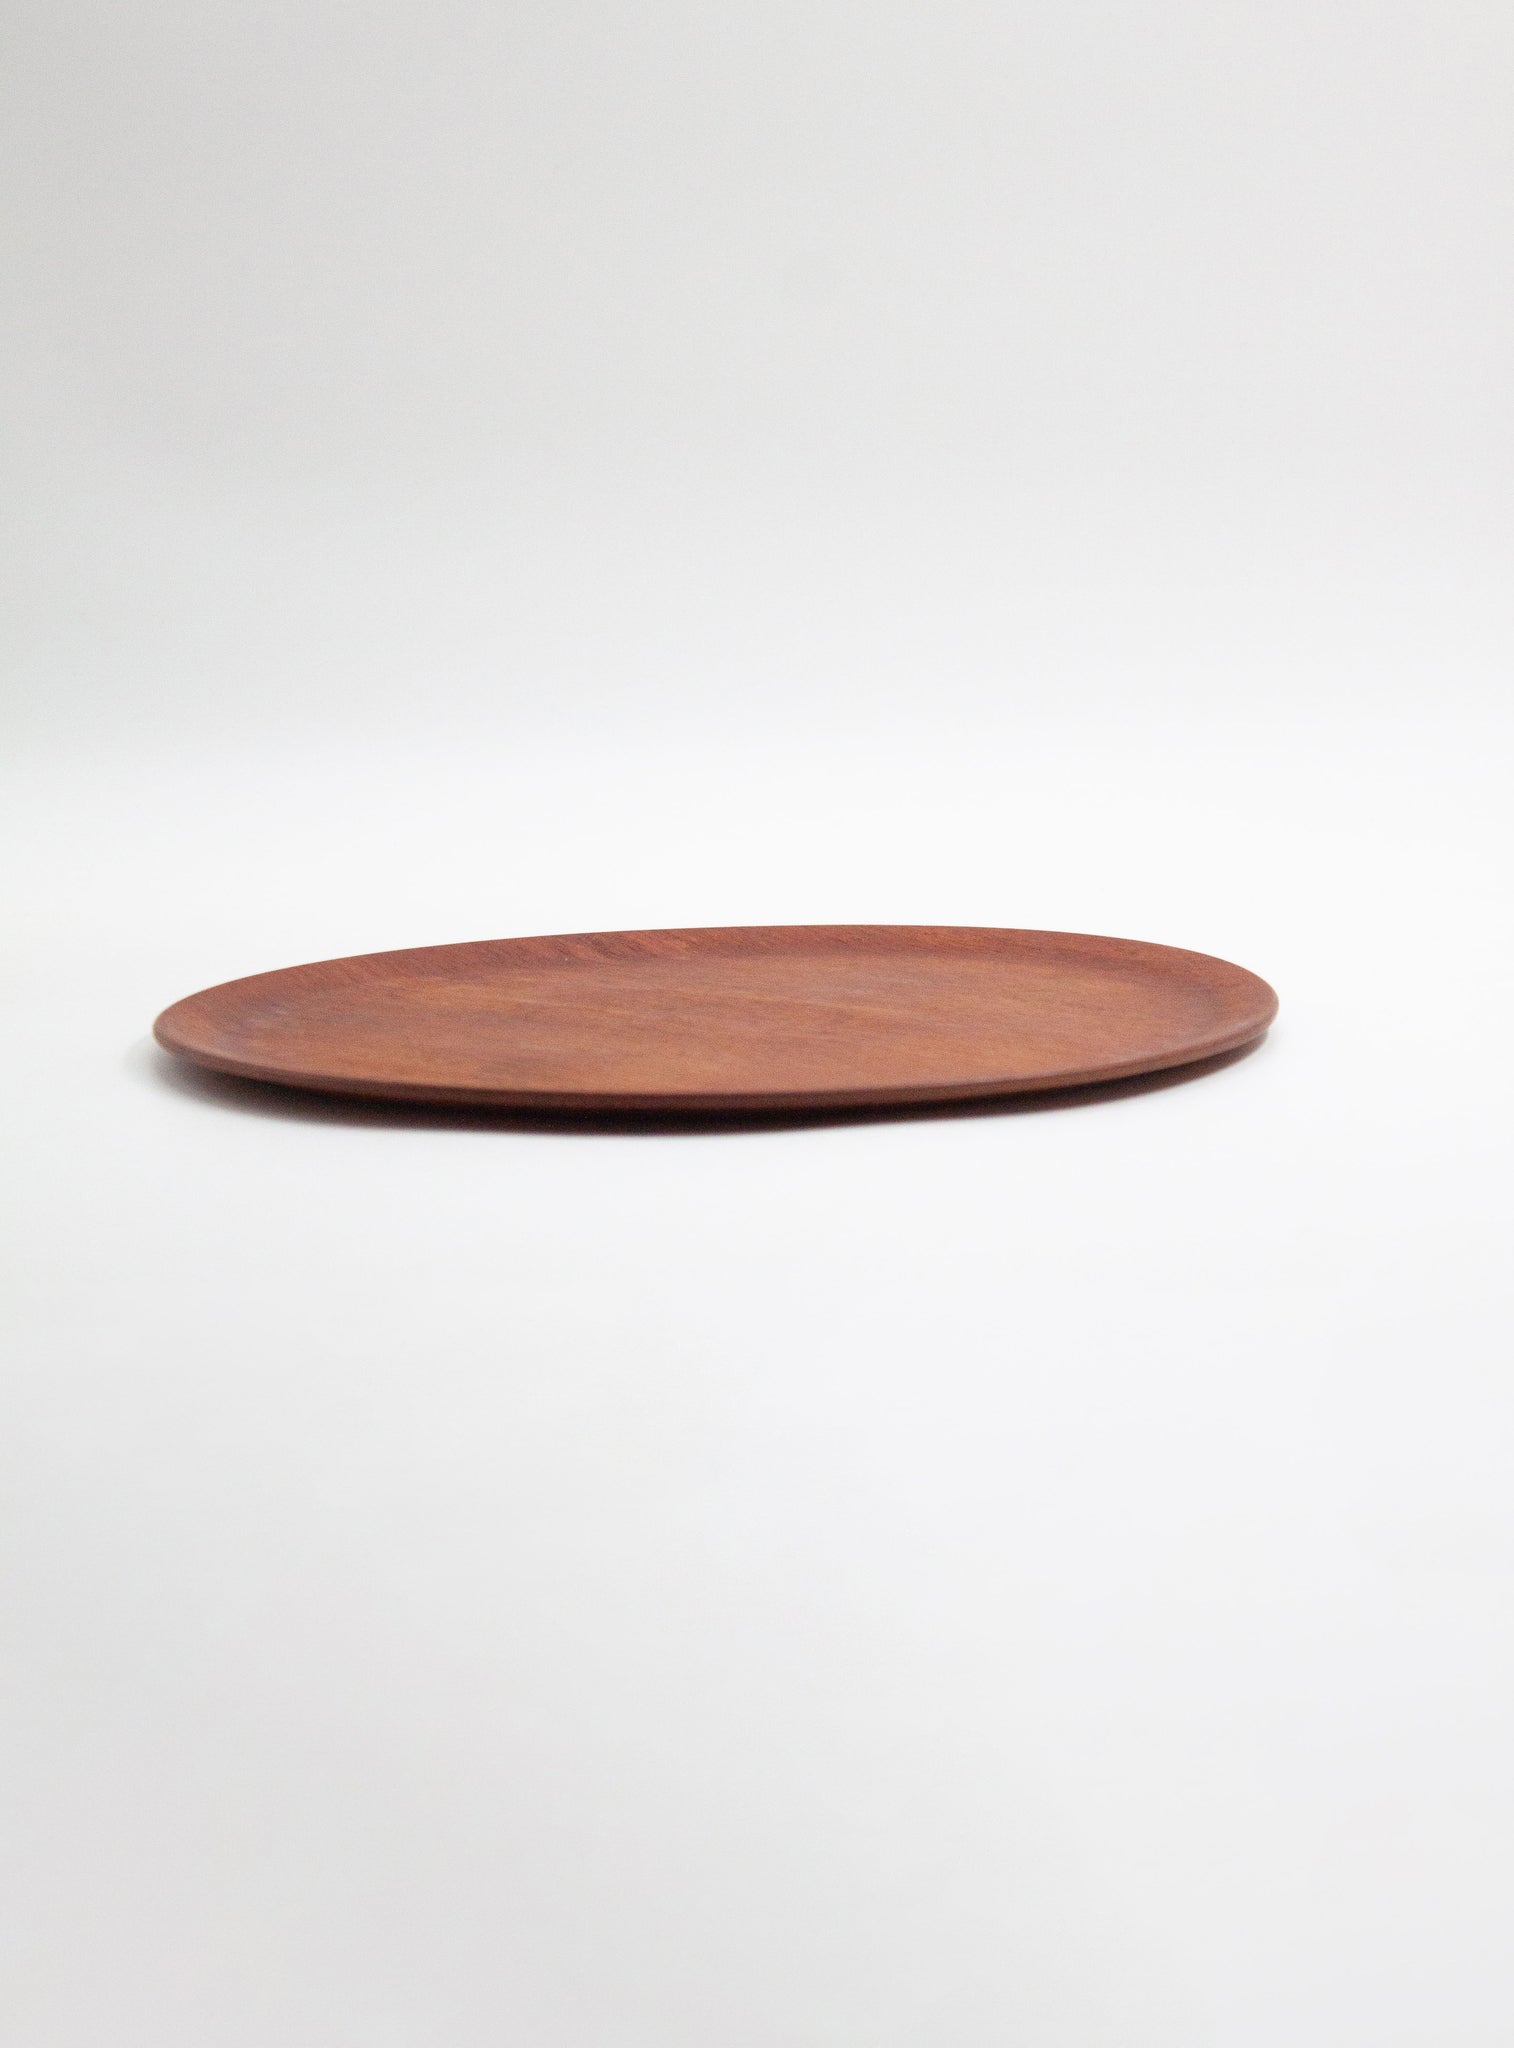 Danish Teak Wooden Plate